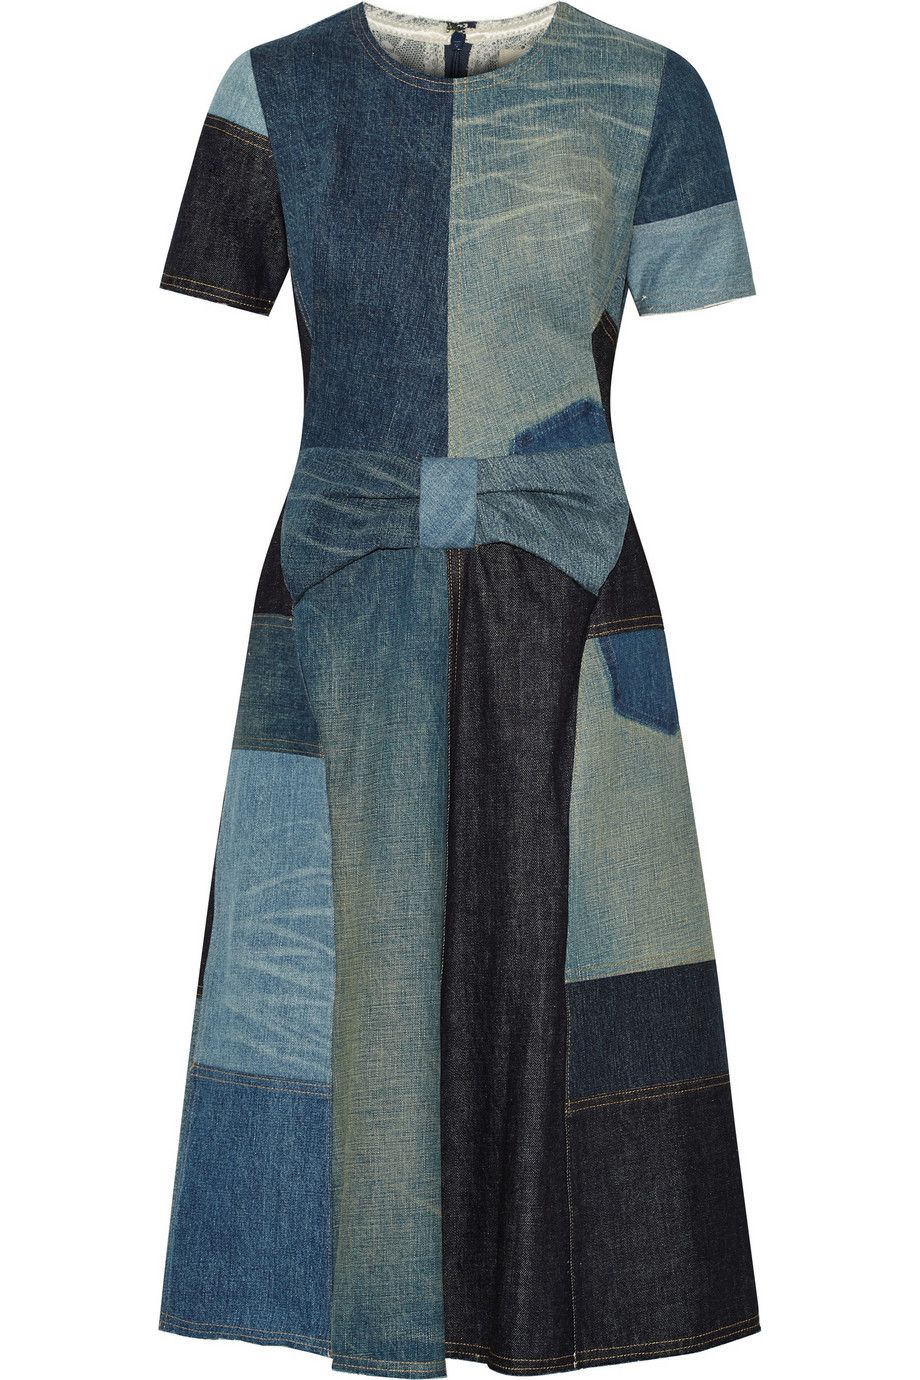 Blue, Sleeve, Textile, Dress, Pattern, Electric blue, Fashion, One-piece garment, Teal, Cobalt blue, 